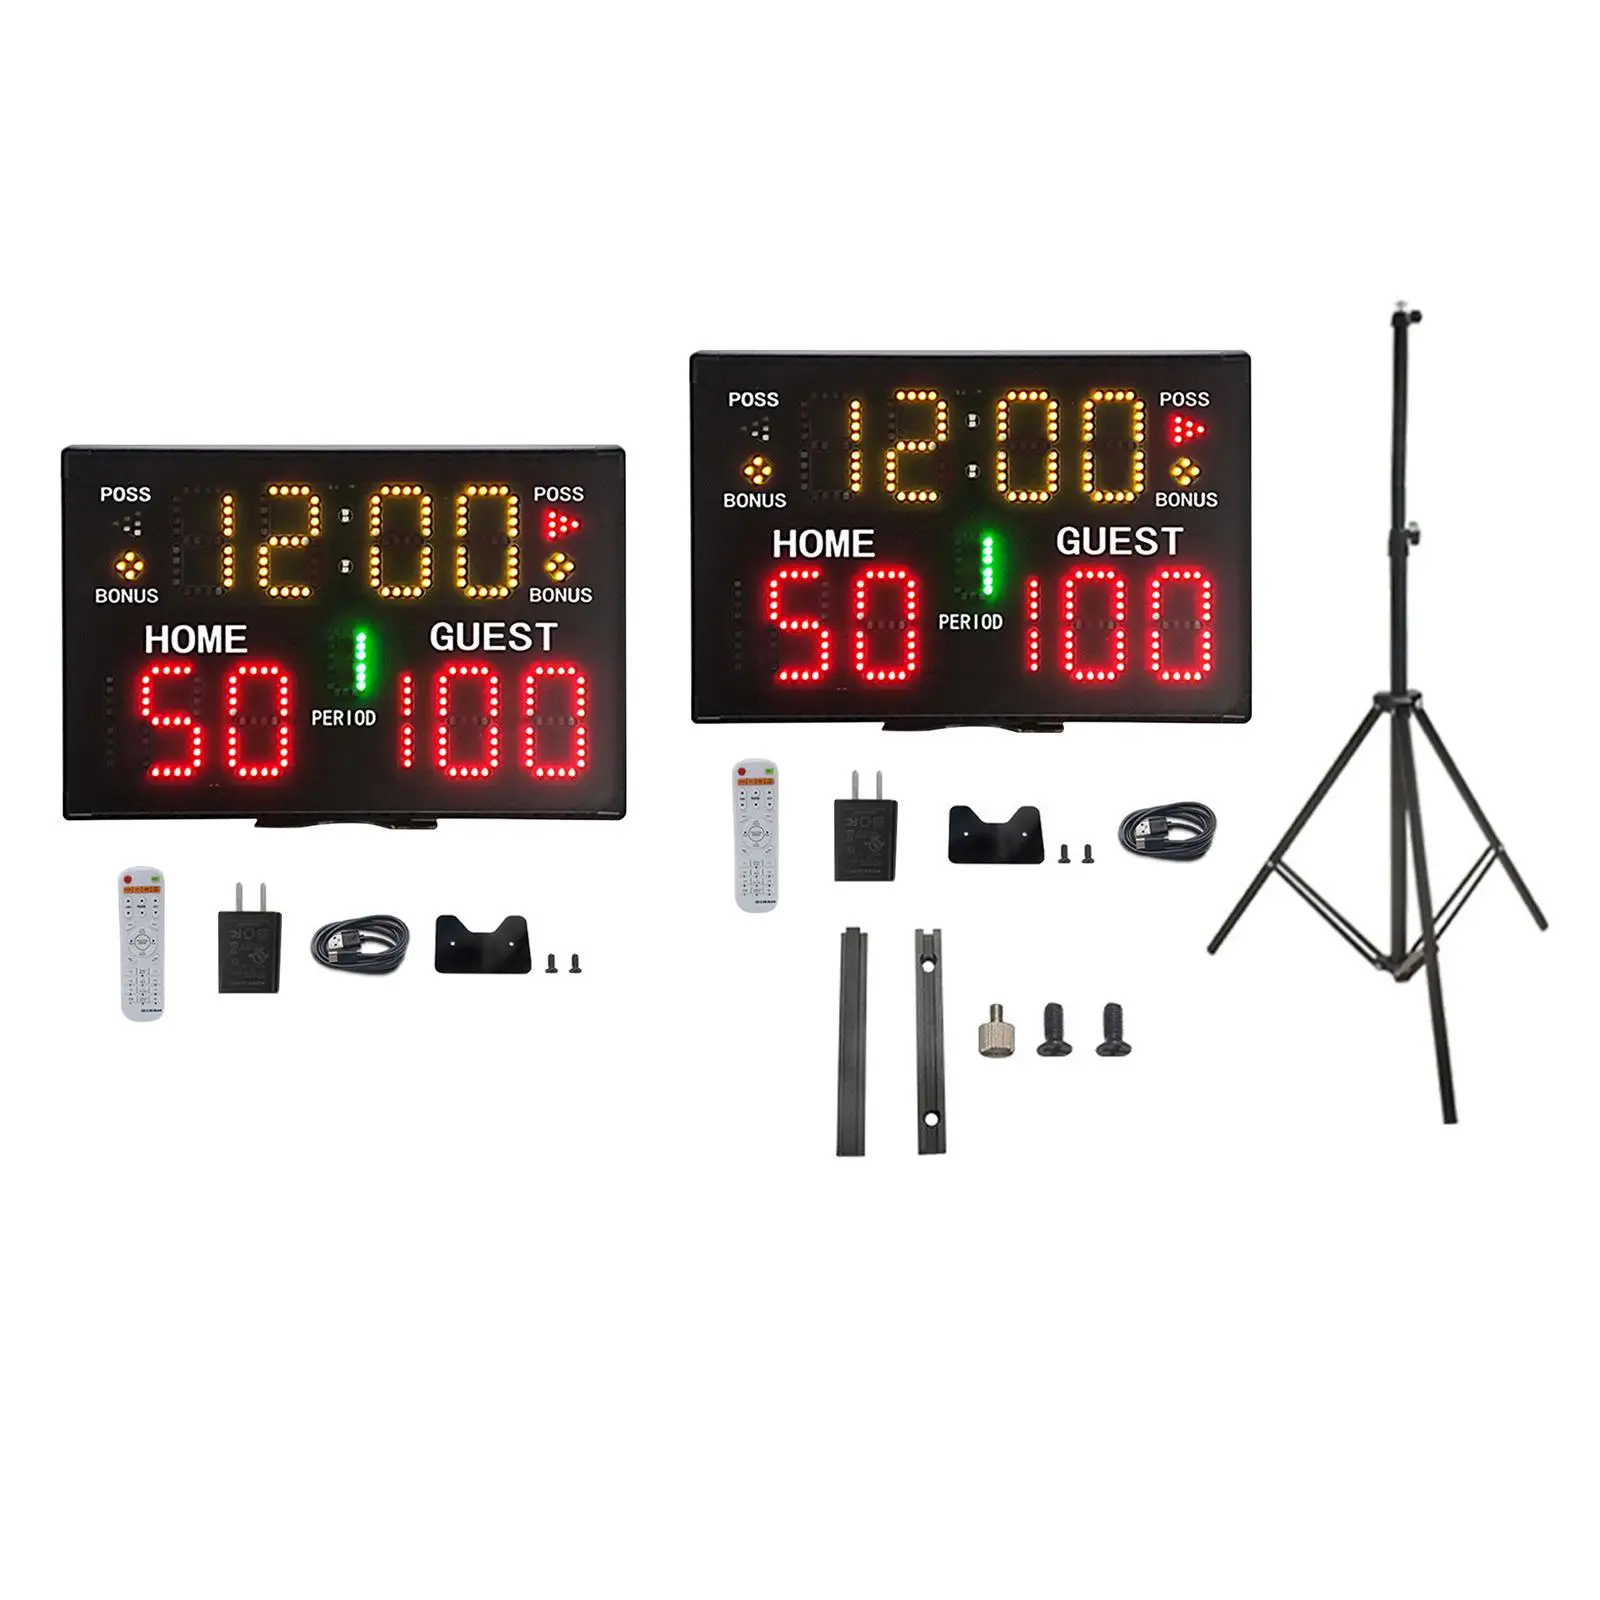 

Portable Digital Scoreboard Score Clock Wall Mounted Battery Operated Electronic Scoreboard for Volleyball Tennis Basketball